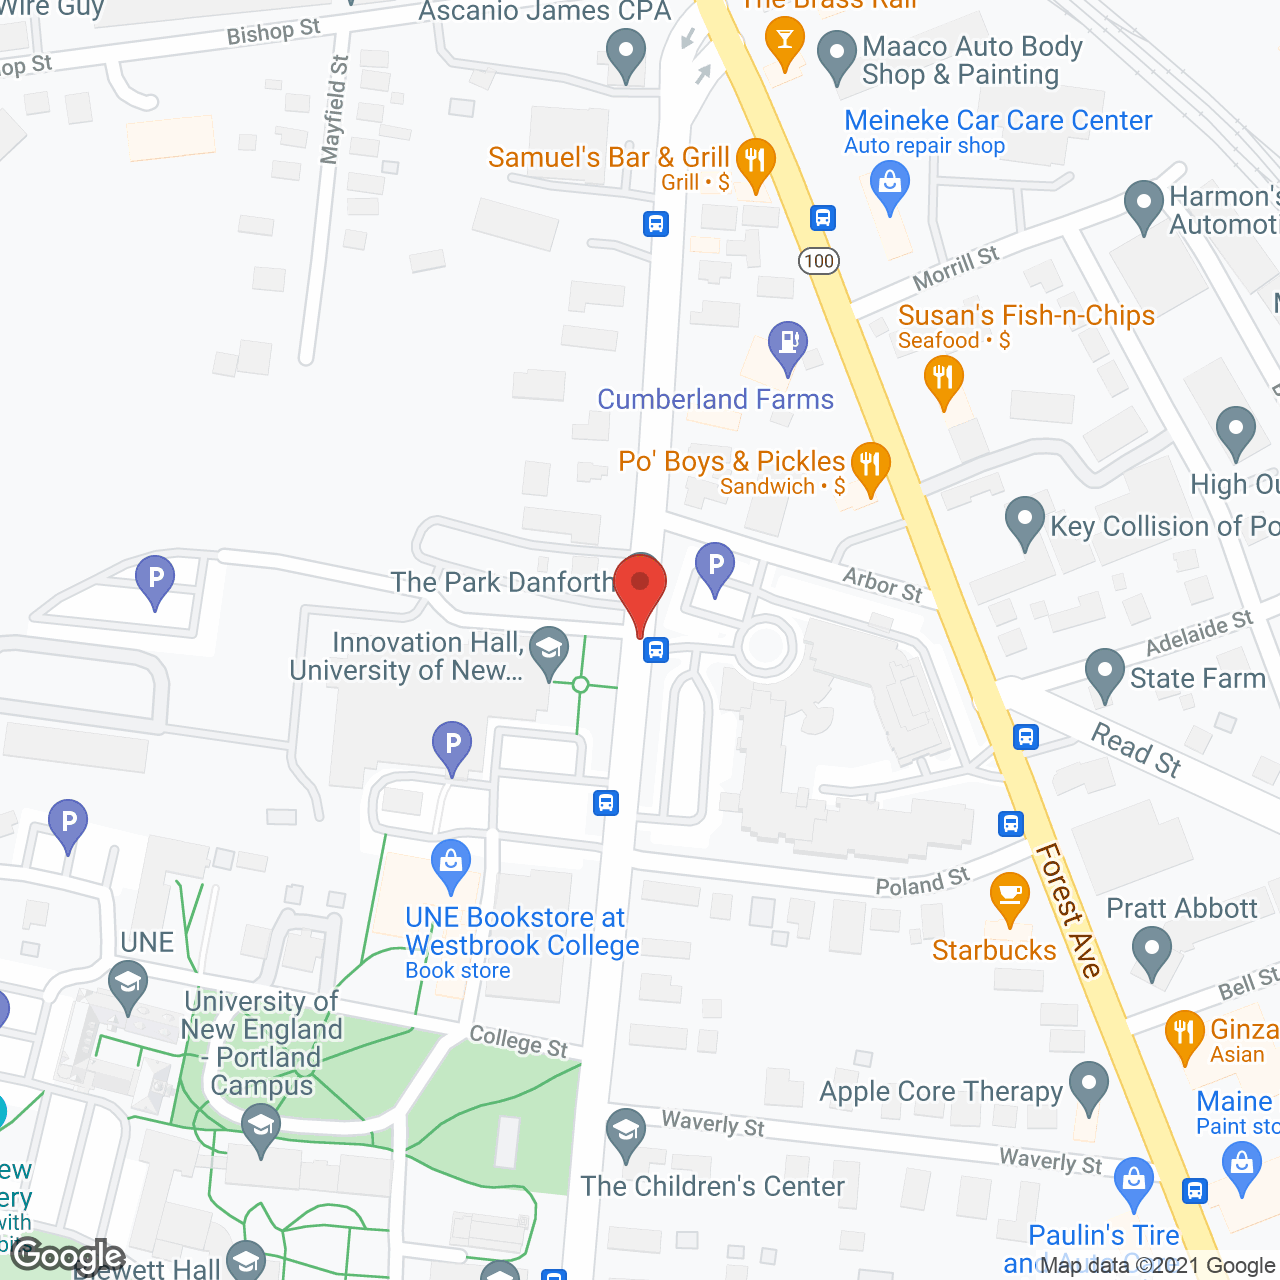 The Park Danforth in google map